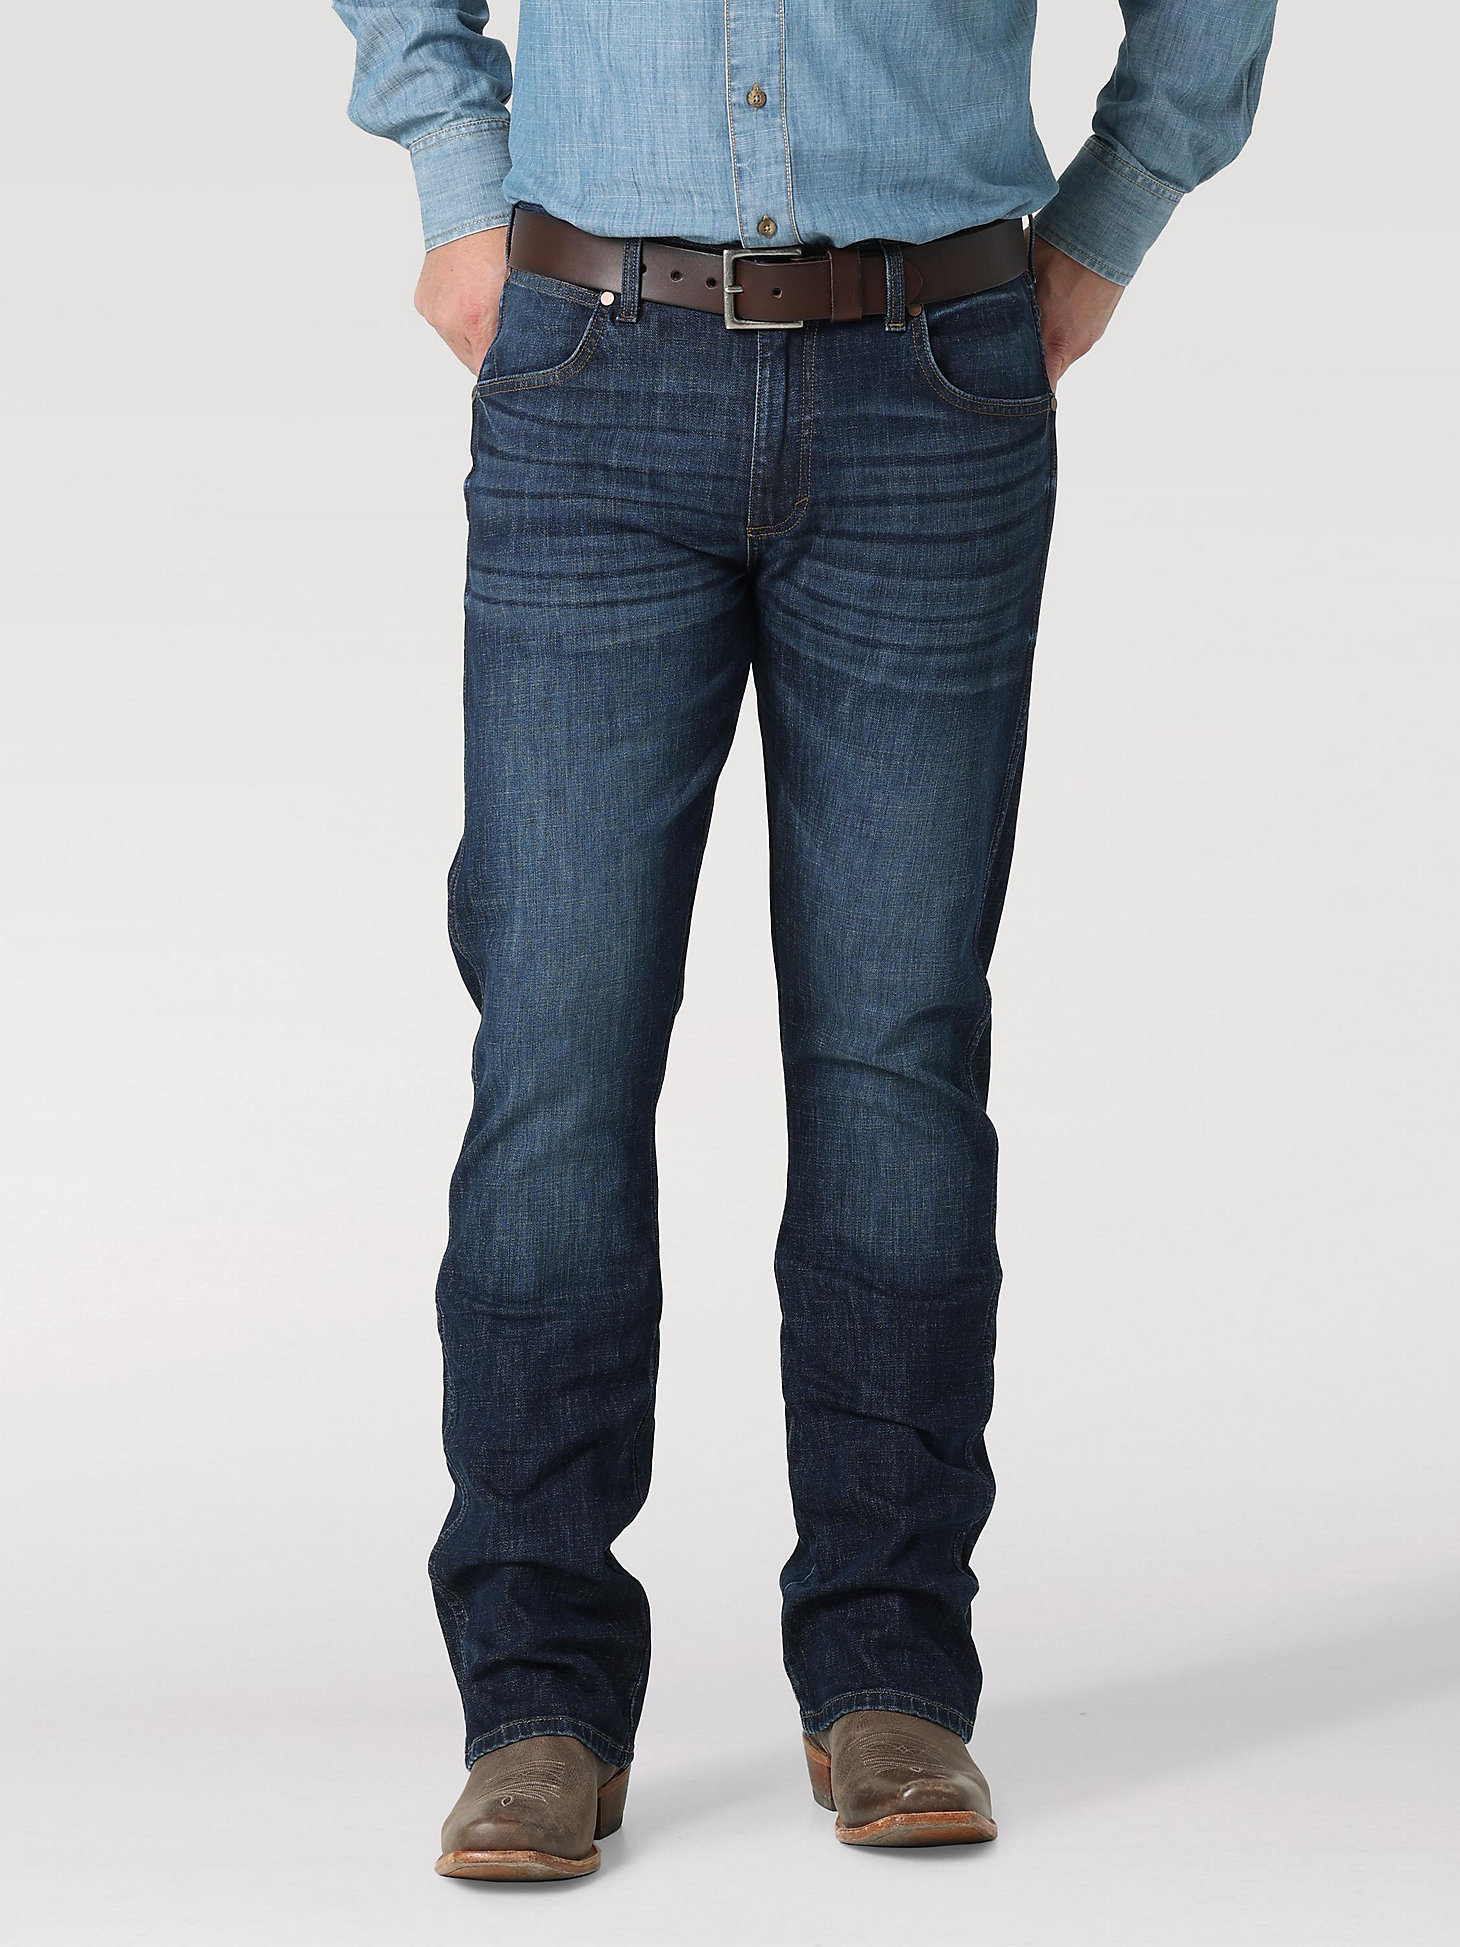 Men's Wrangler Retro® Slim Fit Bootcut Jean in Merriam alternative view 1